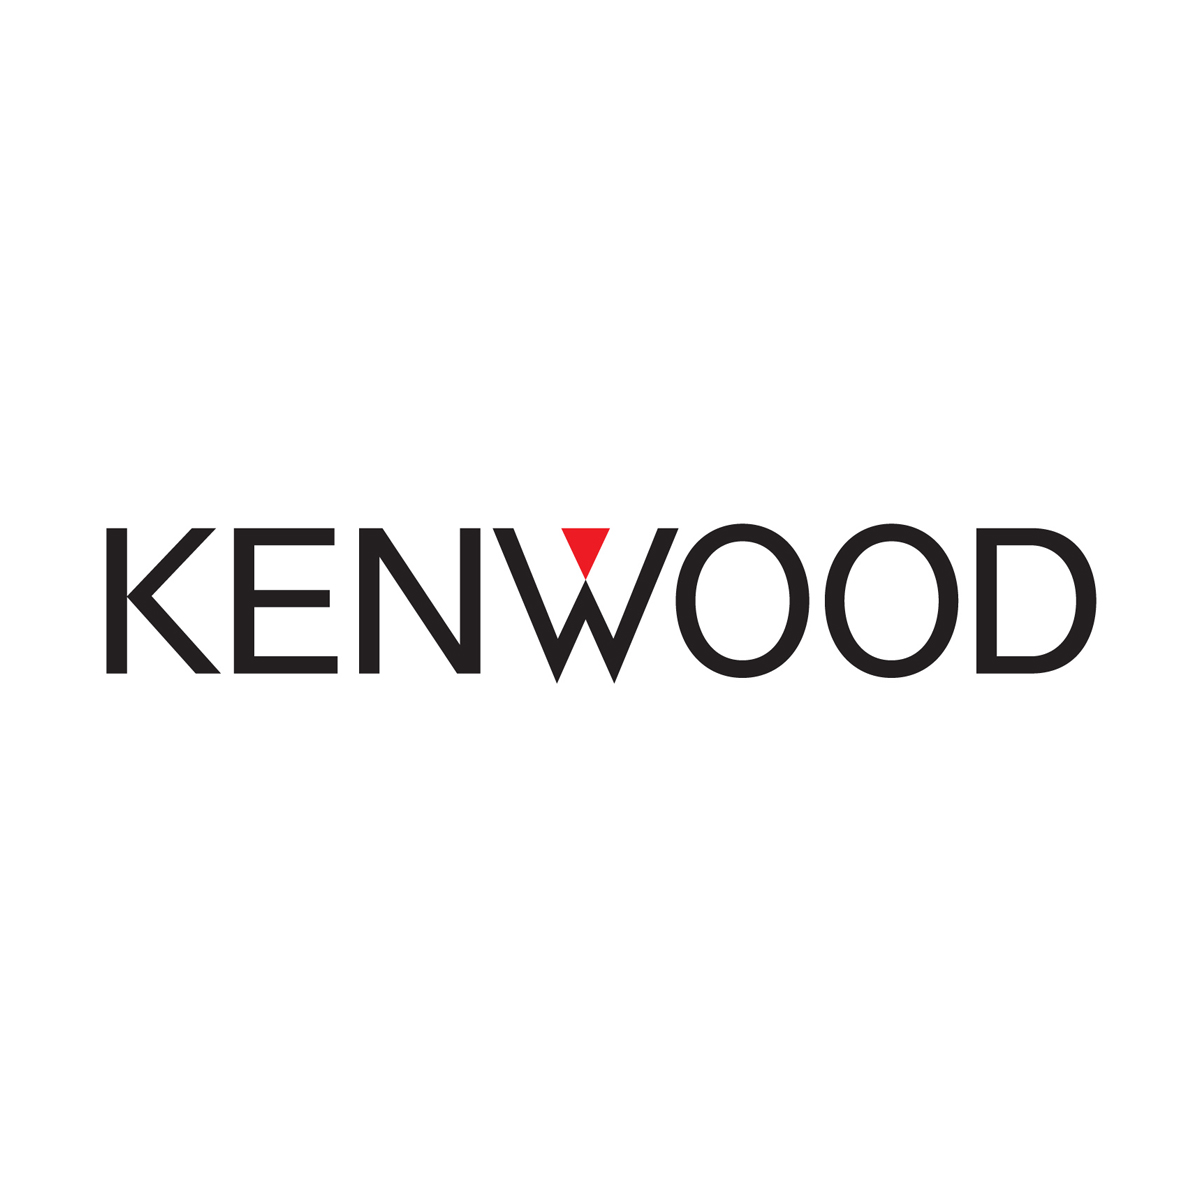 Kenwood brand